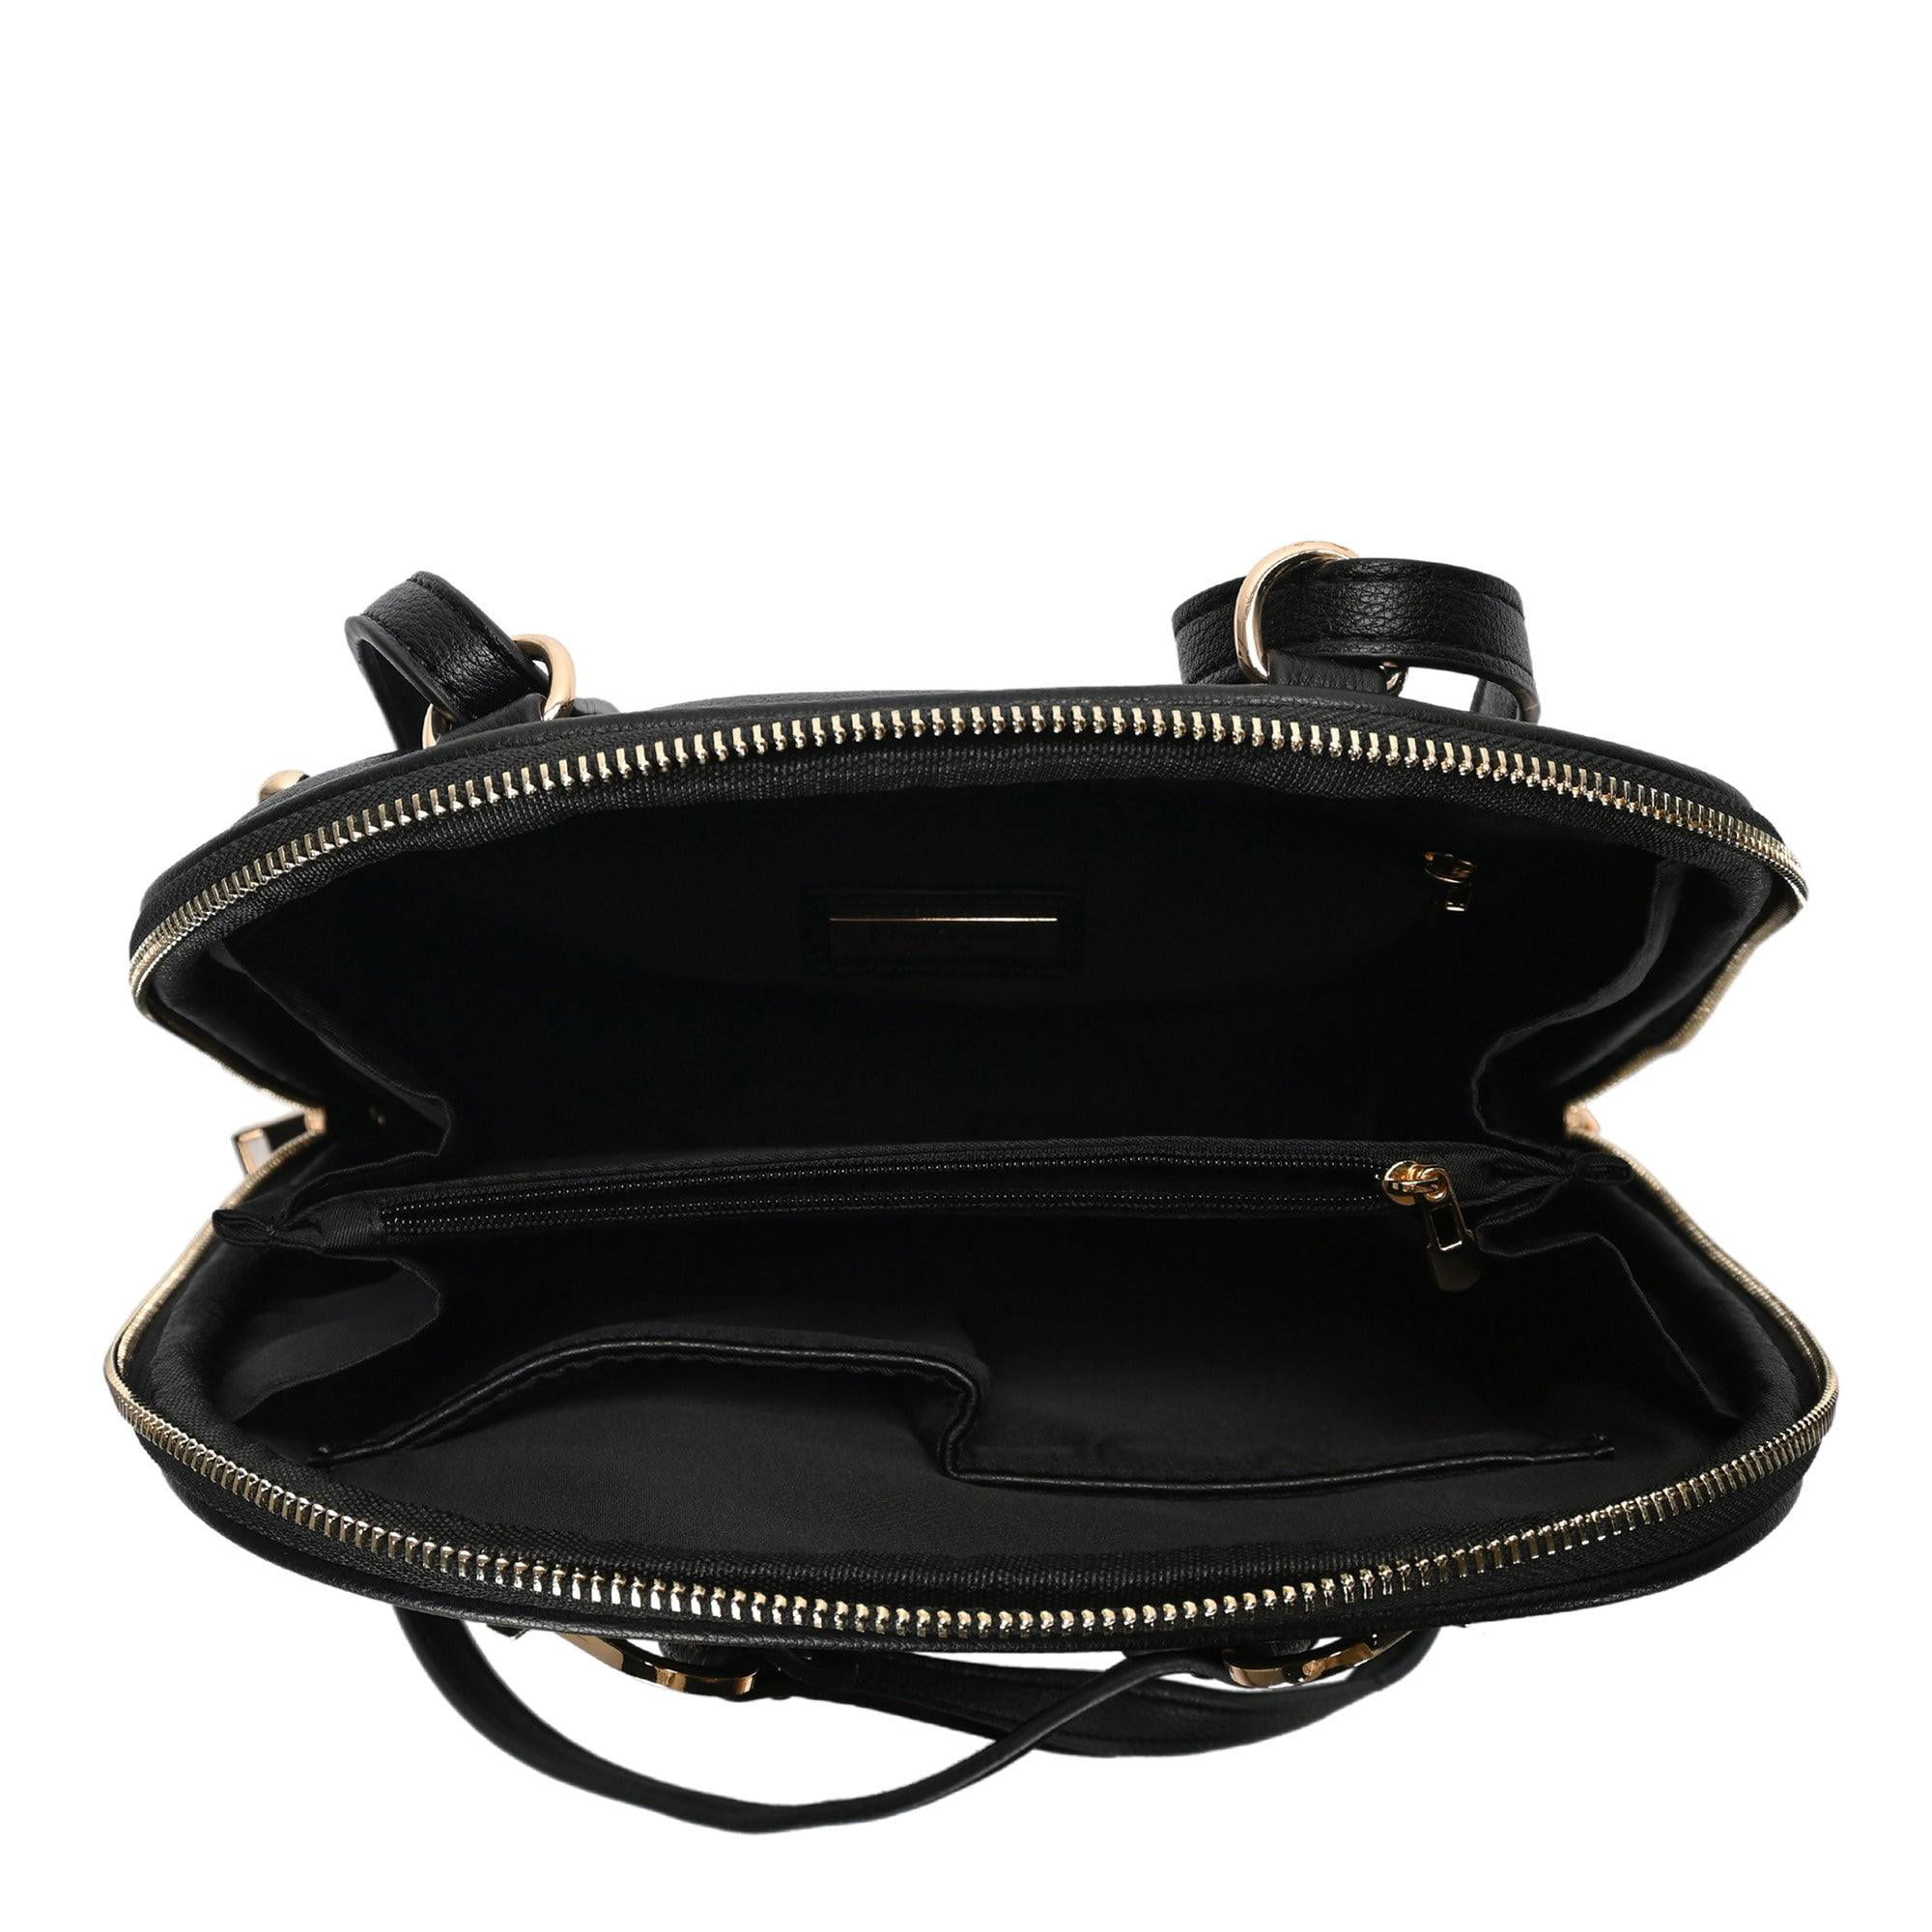 Buy the Miztique Tan Daisy Cork Convertible Small Backpack Bag